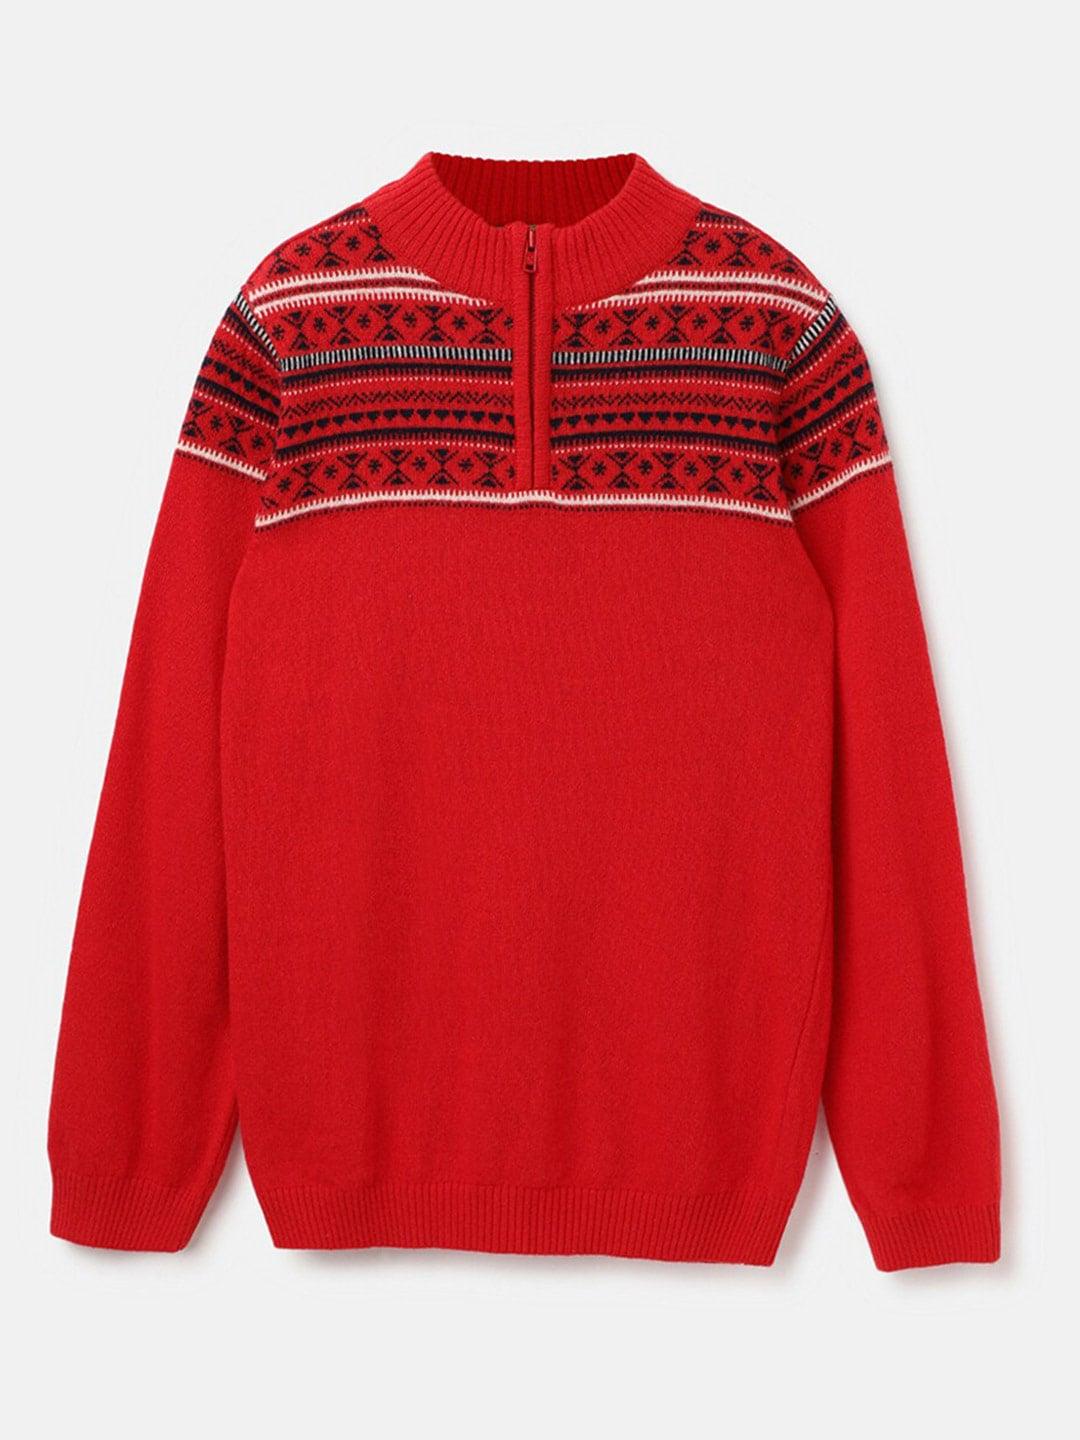 united-colors-of-benetton-boys-geometric-printed-turtle-neck-half-zipper-pullover-sweater